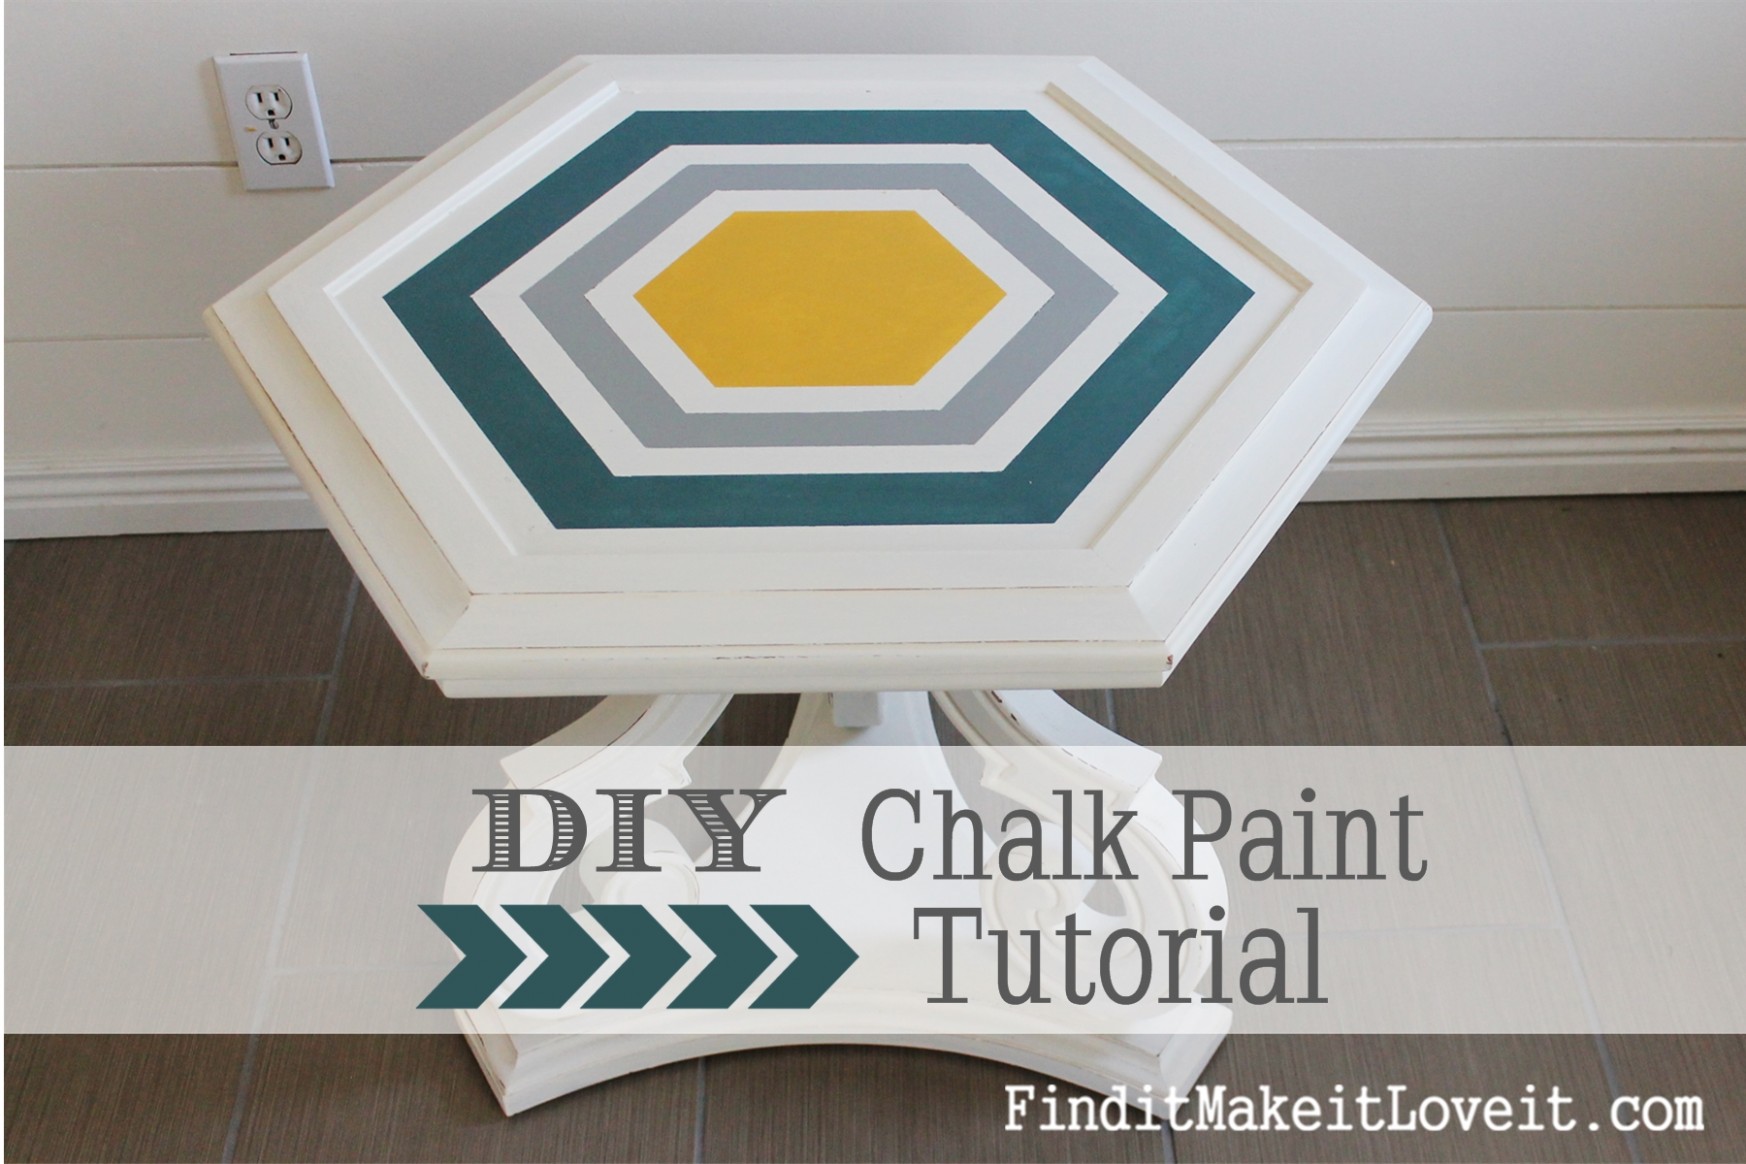 Diy Money Saving Chalk Paint Find It, Make It, Love It Where To Buy Diy Chalk Paint